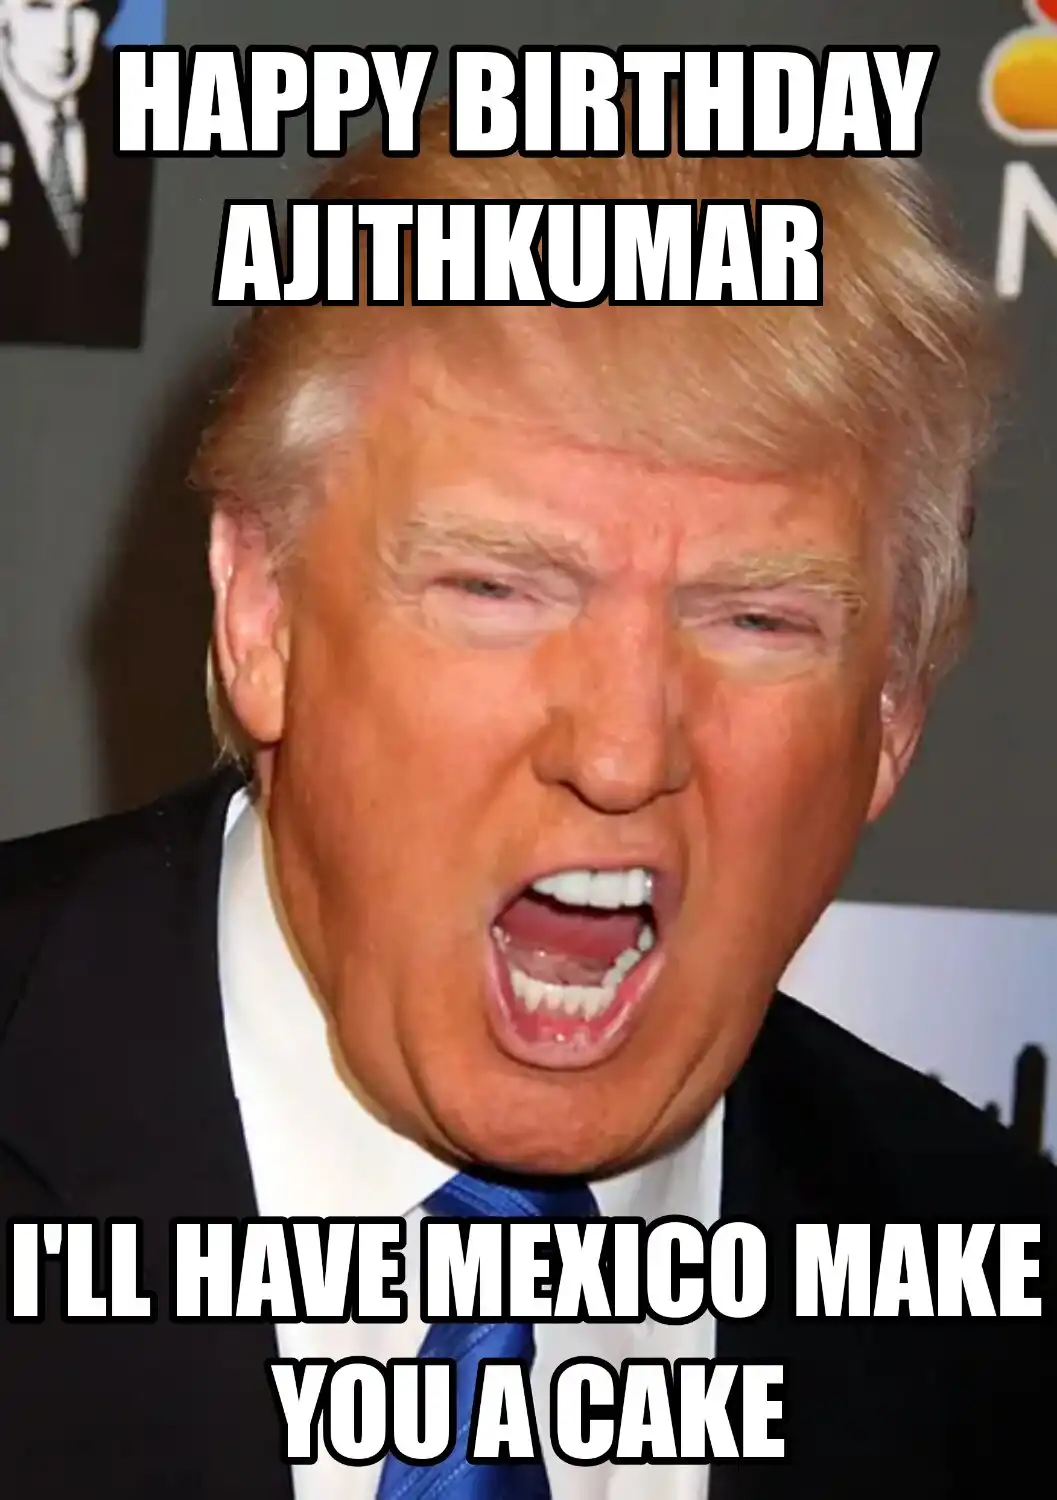 Happy Birthday Ajithkumar Mexico Make You A Cake Meme